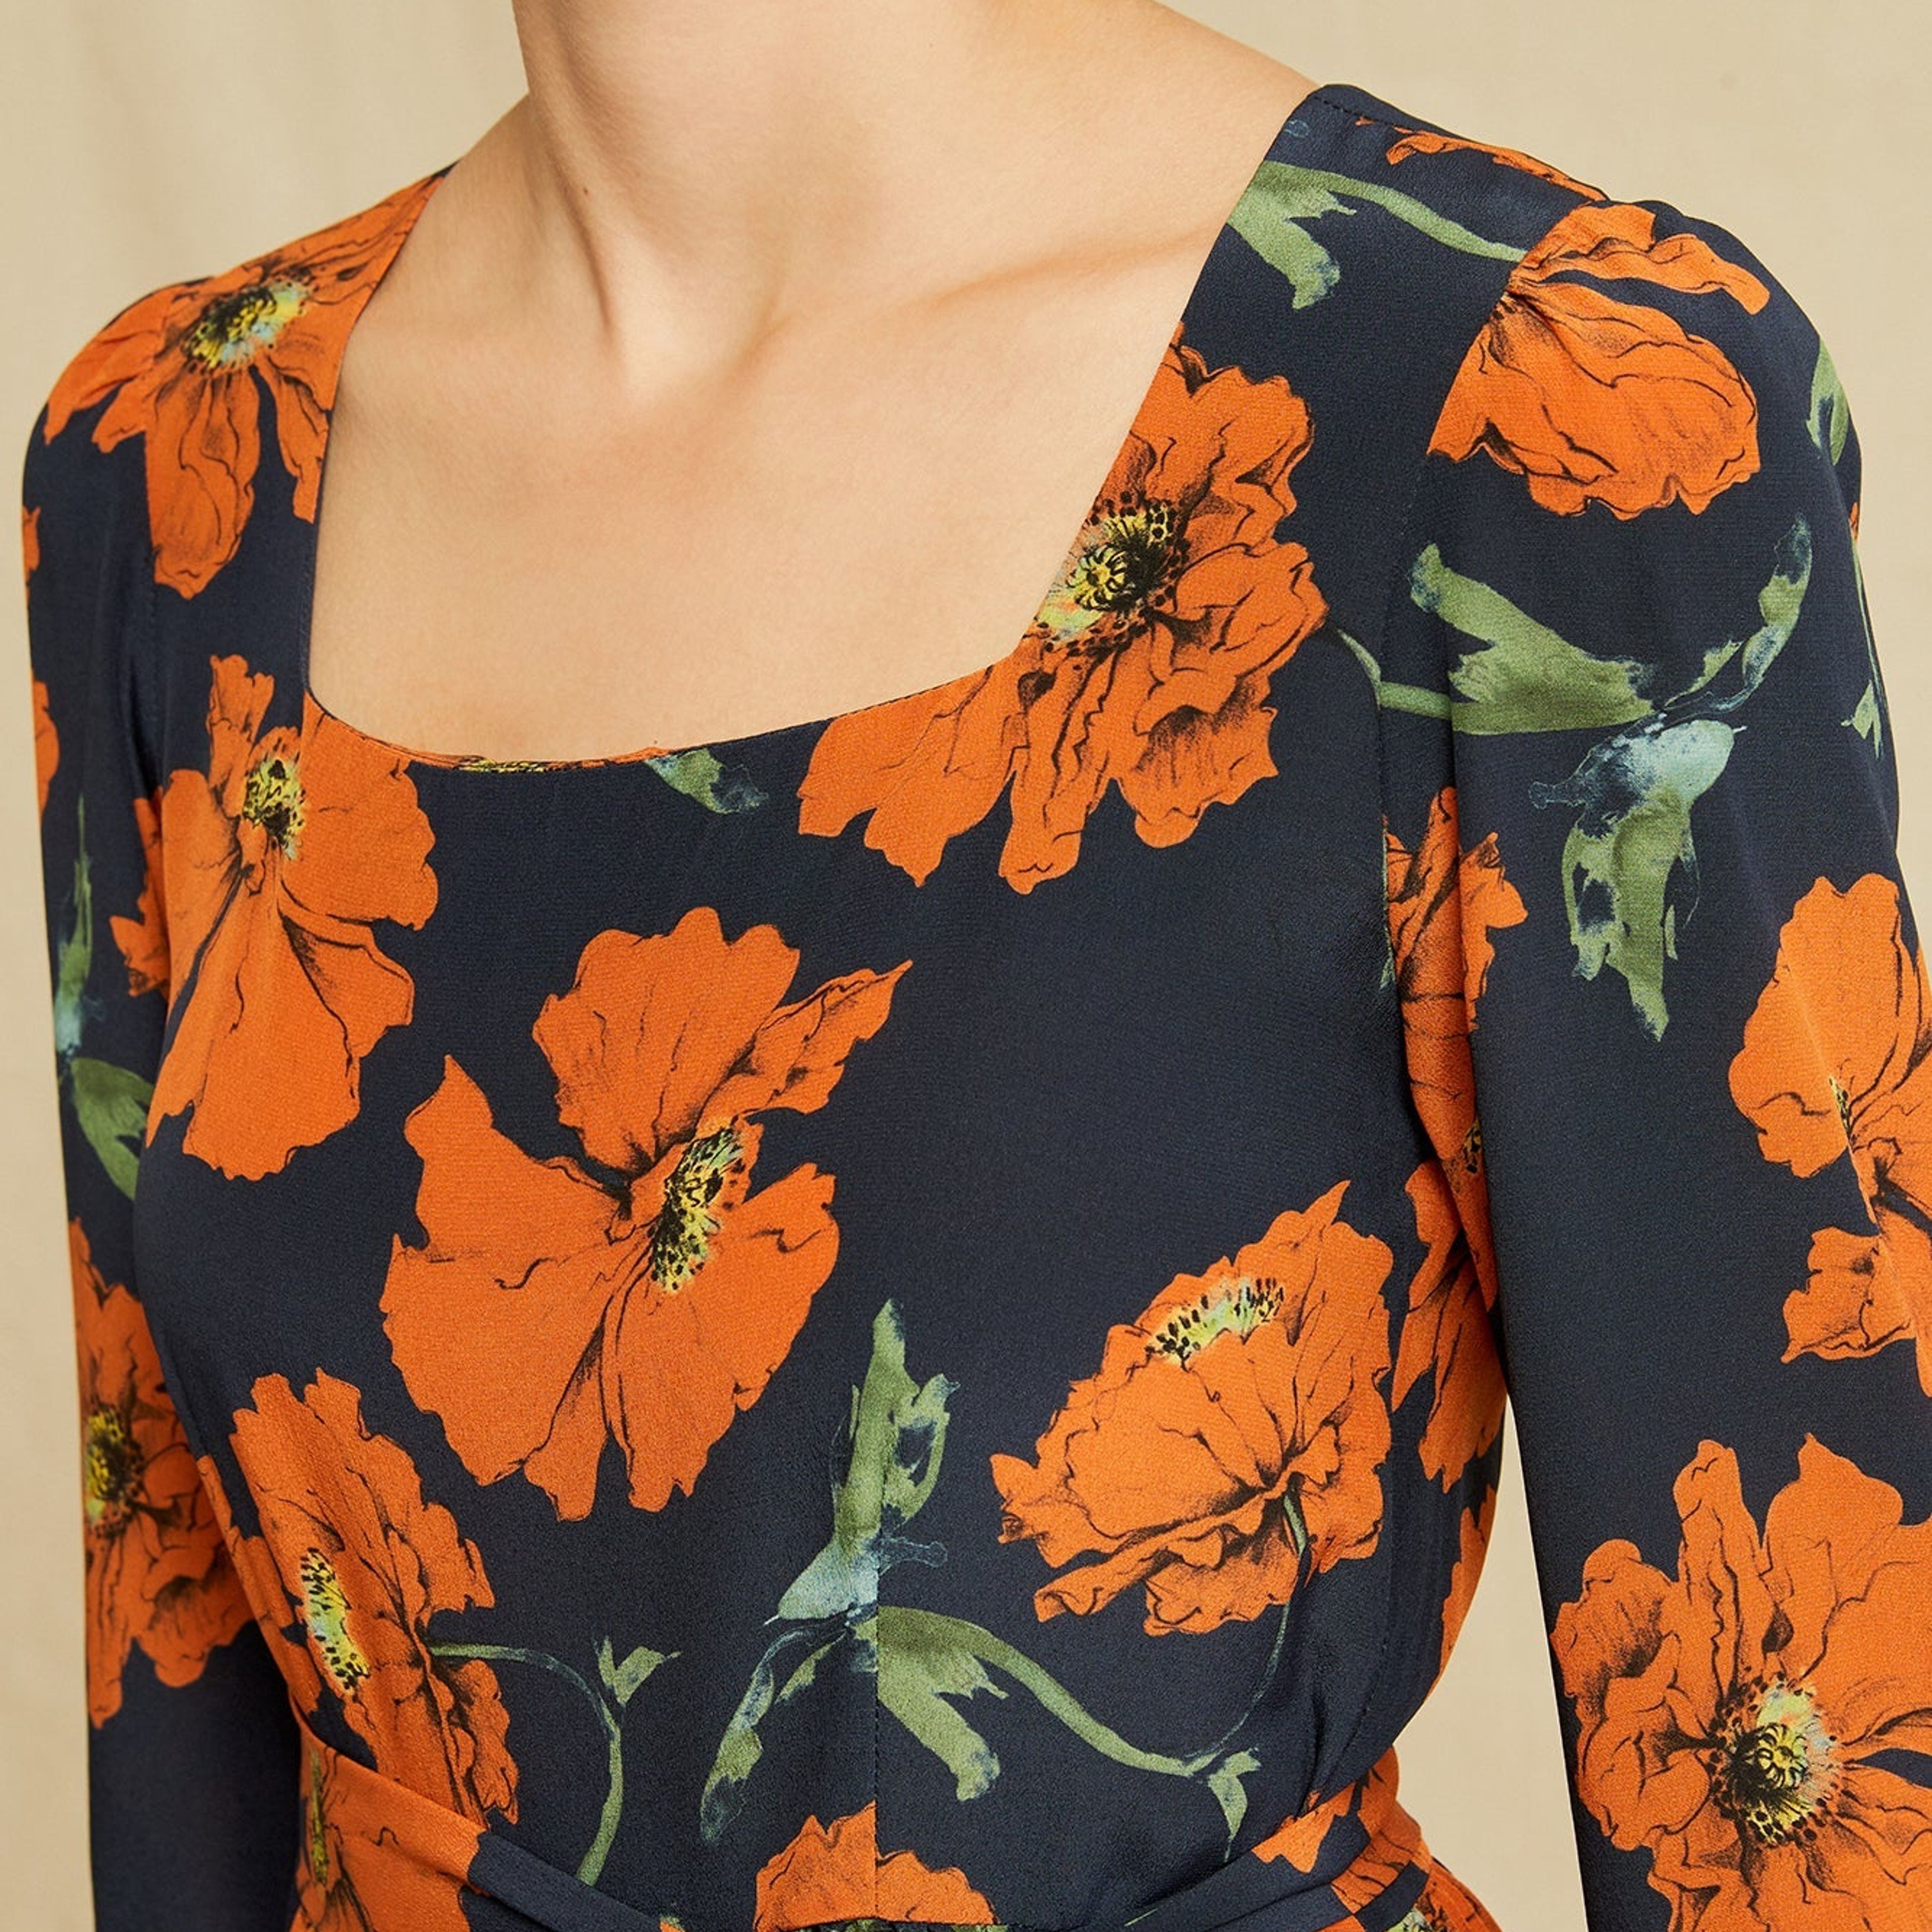 Adrienne Washable Silk Dress - Paysage Floral